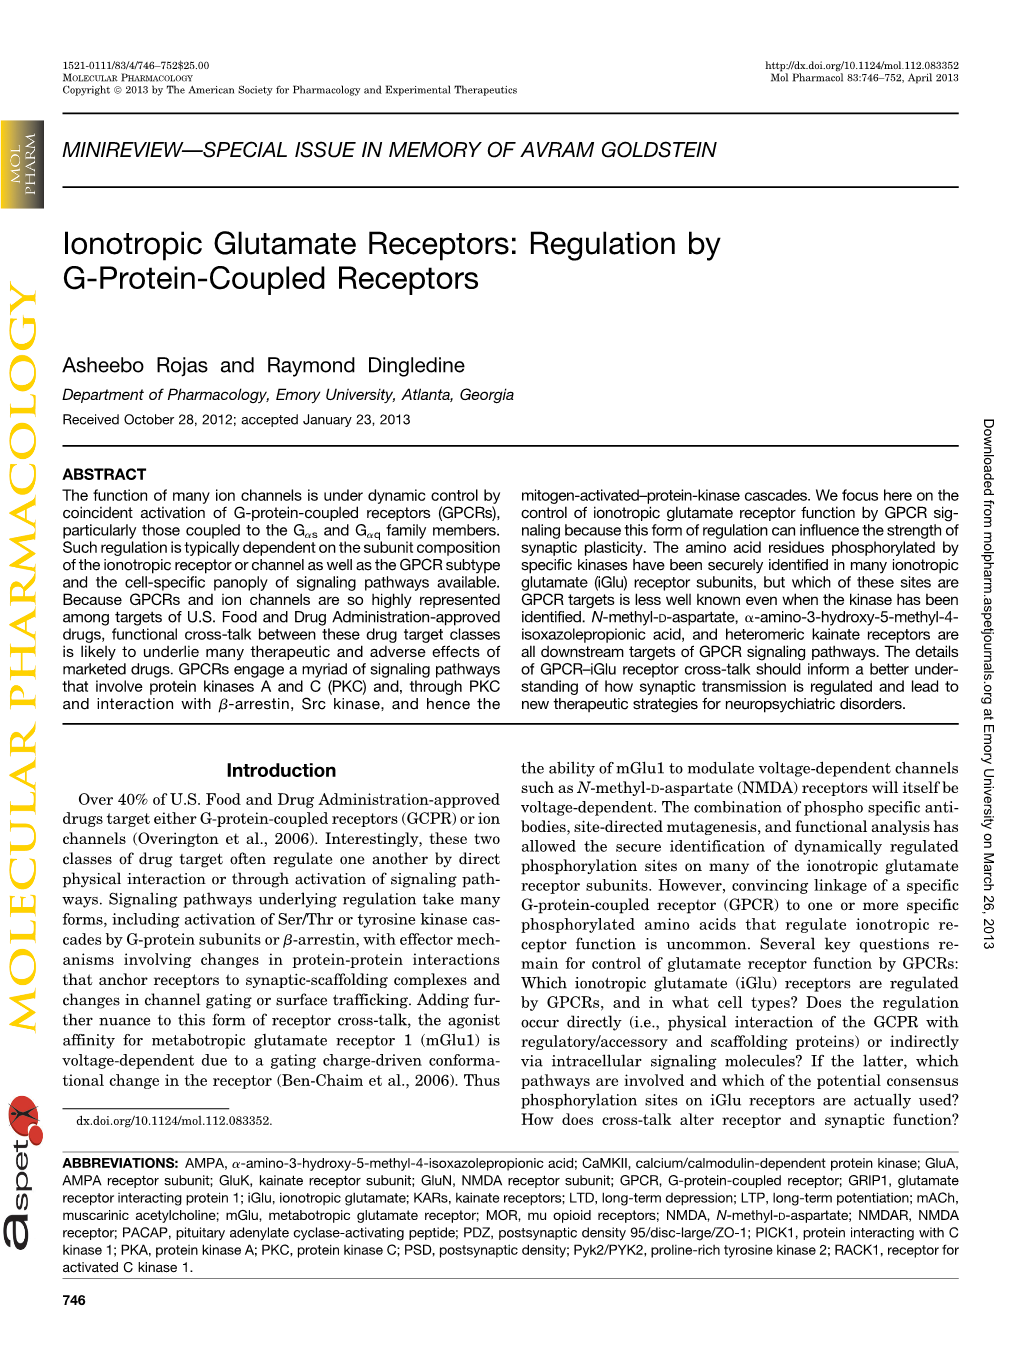 Ionotropic Glutamate Receptors: Regulation by G-Protein-Coupled Receptors